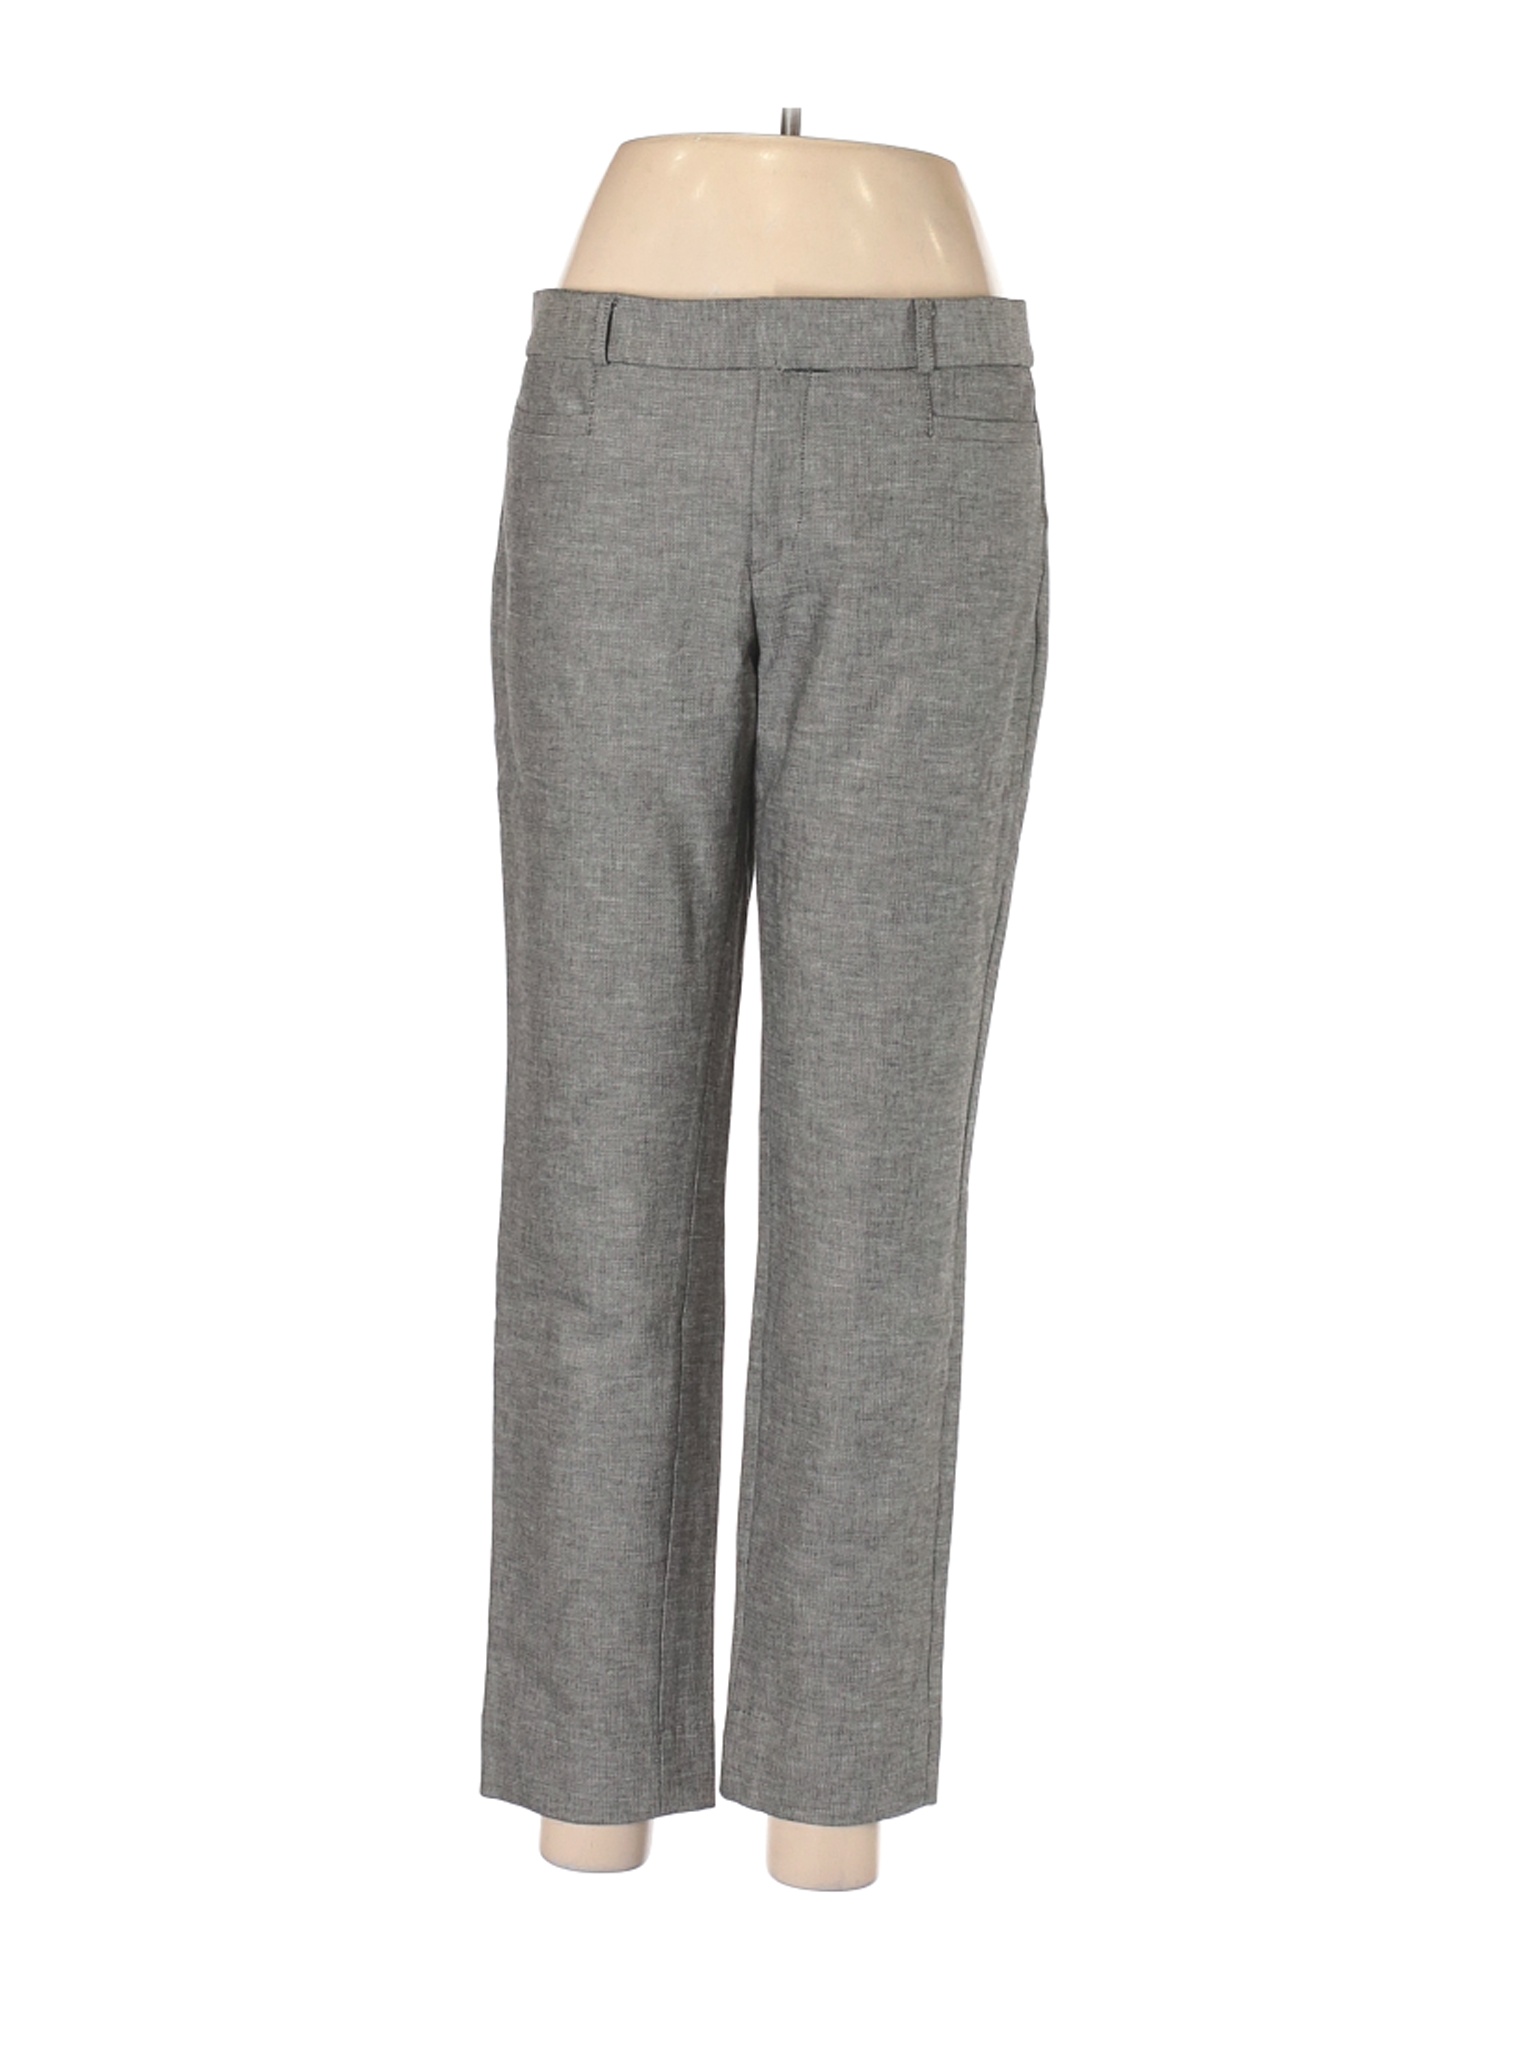 Banana Republic Women Gray Casual Pants 6 | eBay